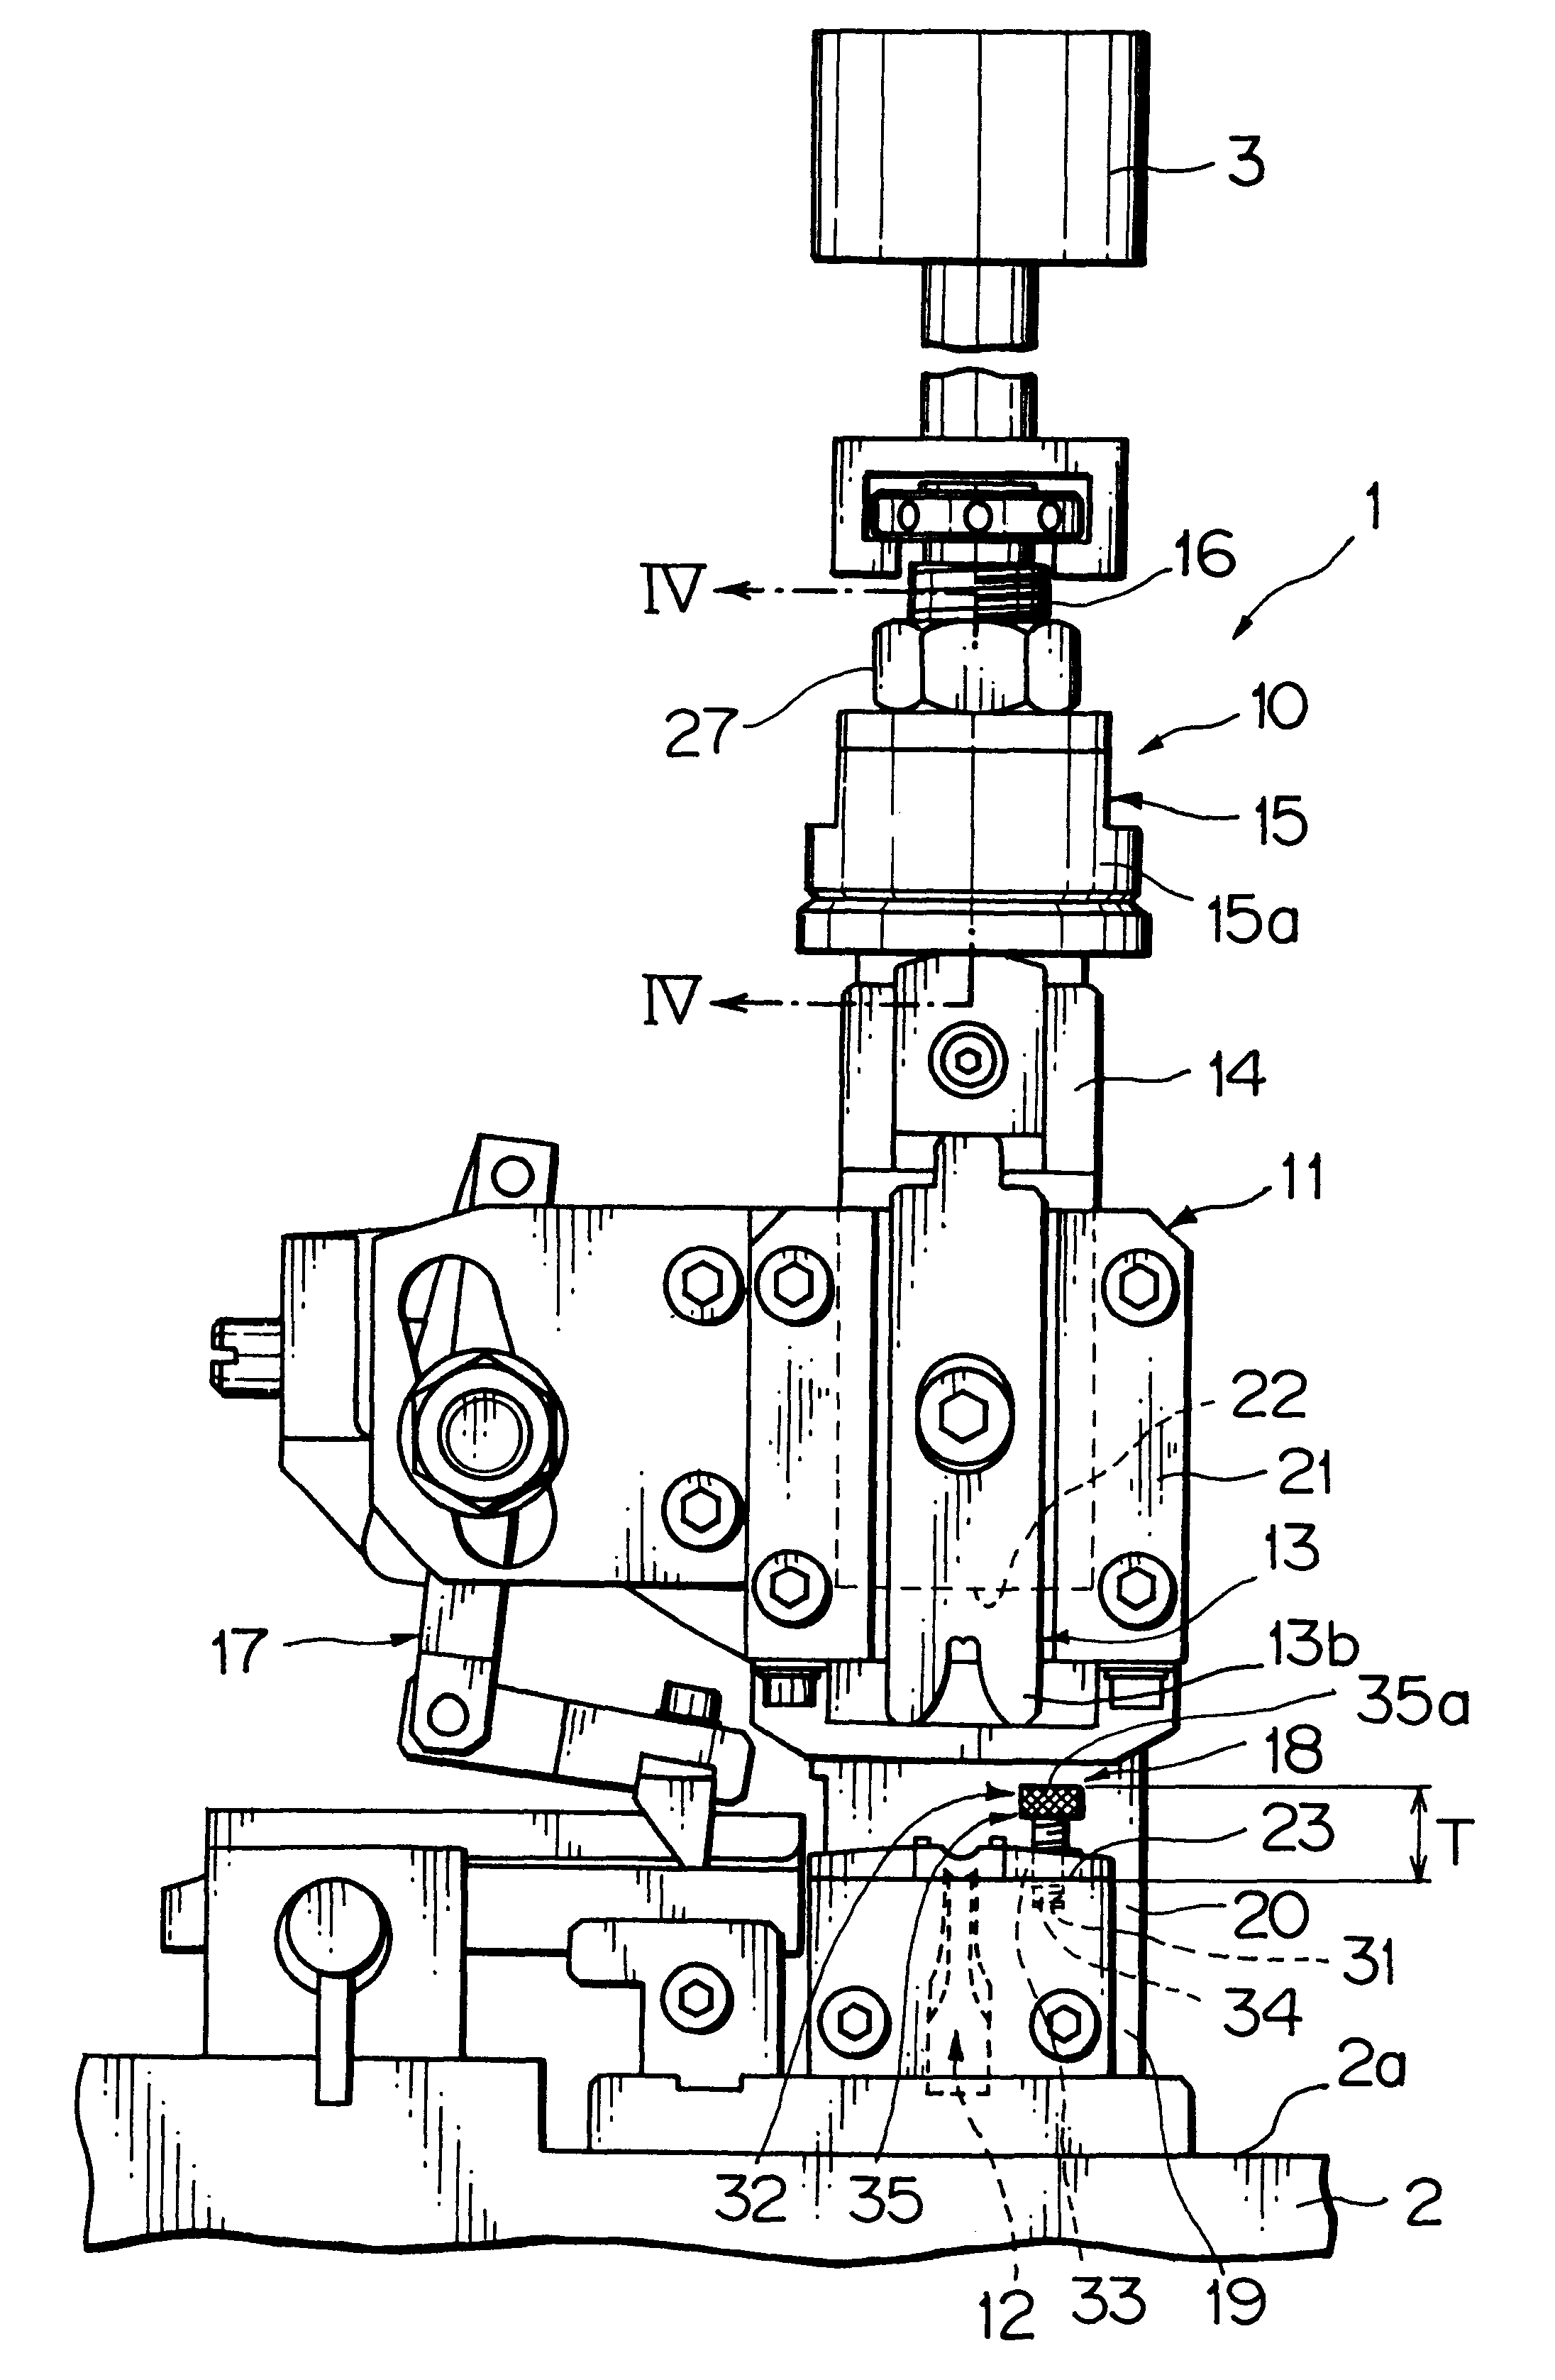 Terminal pressure-welding apparatus